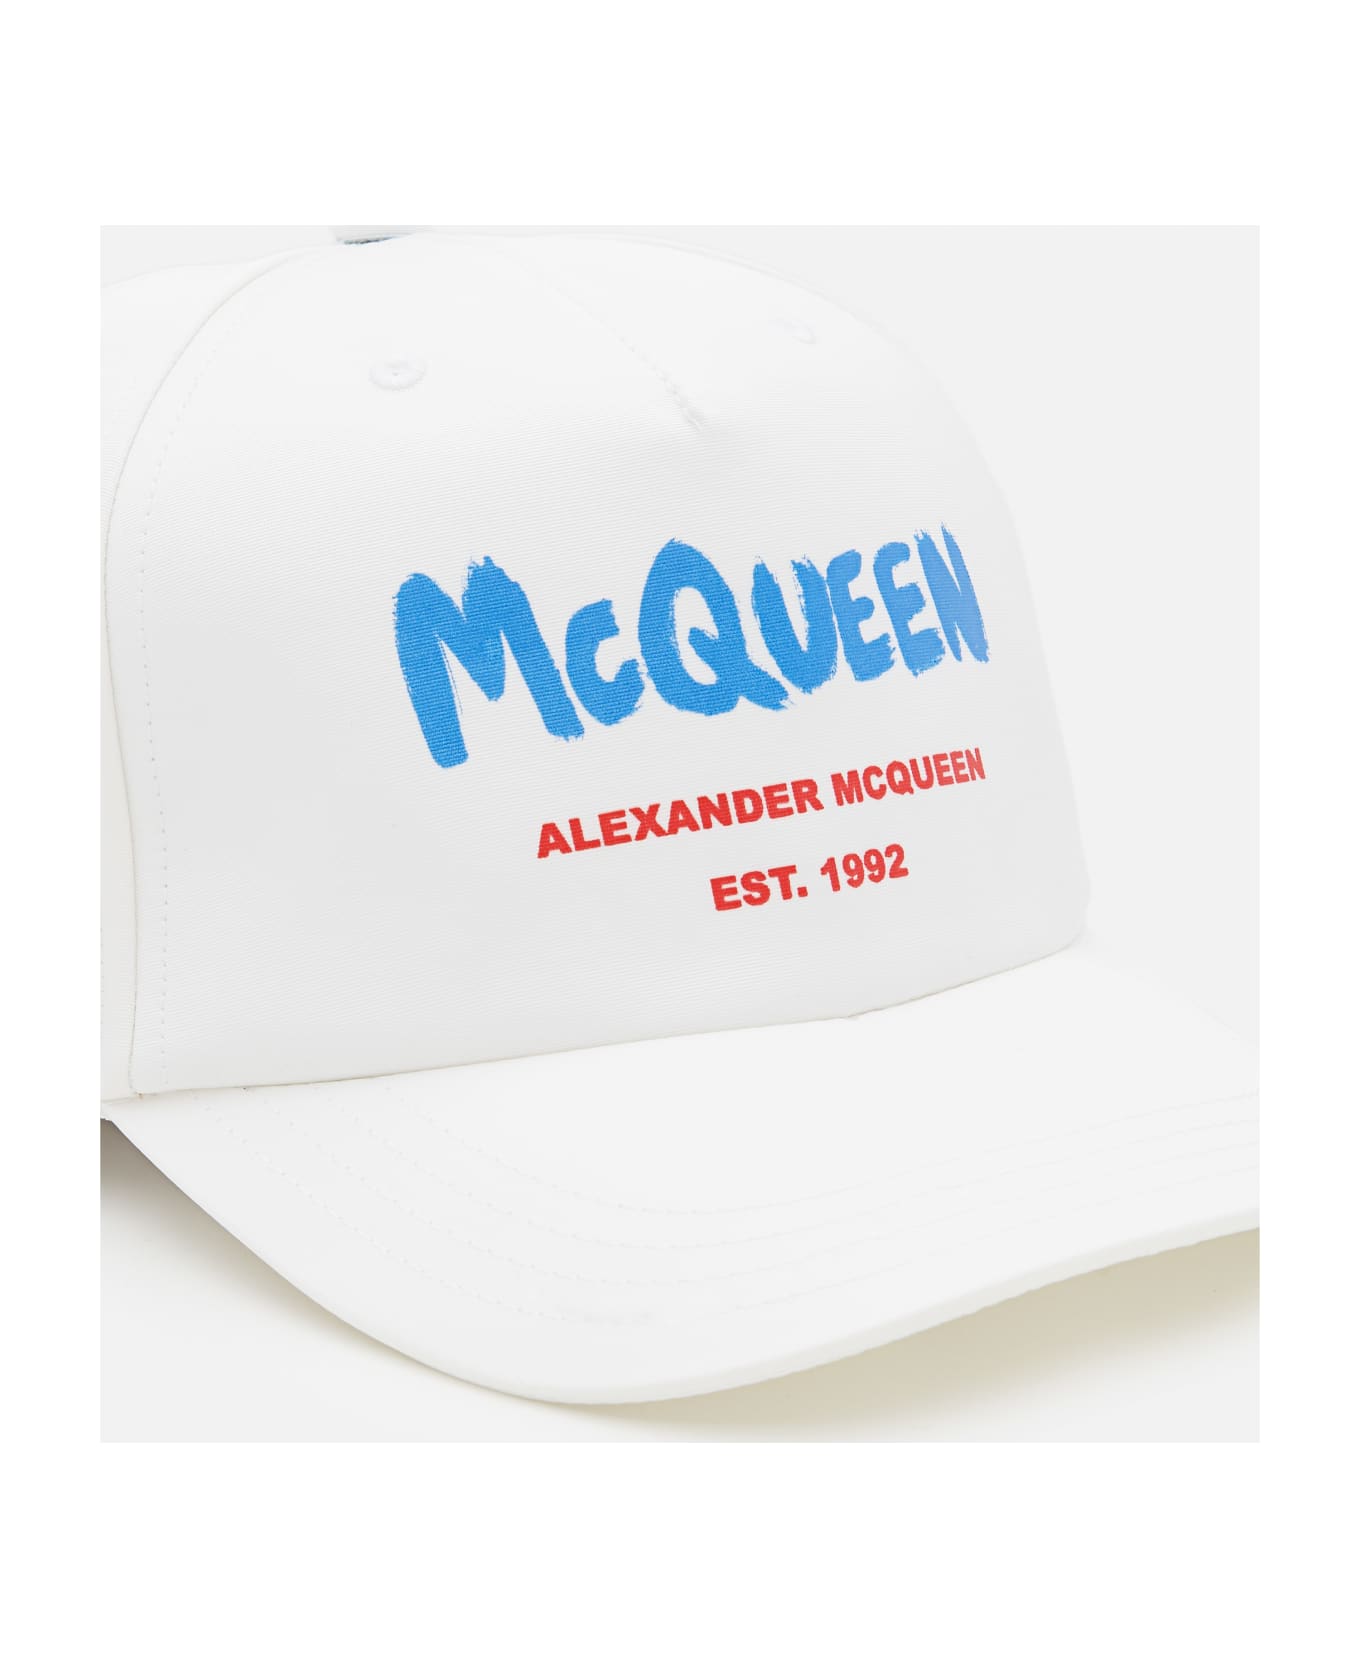 Alexander McQueen Tonal Graffiti Baseball Hat - White 帽子